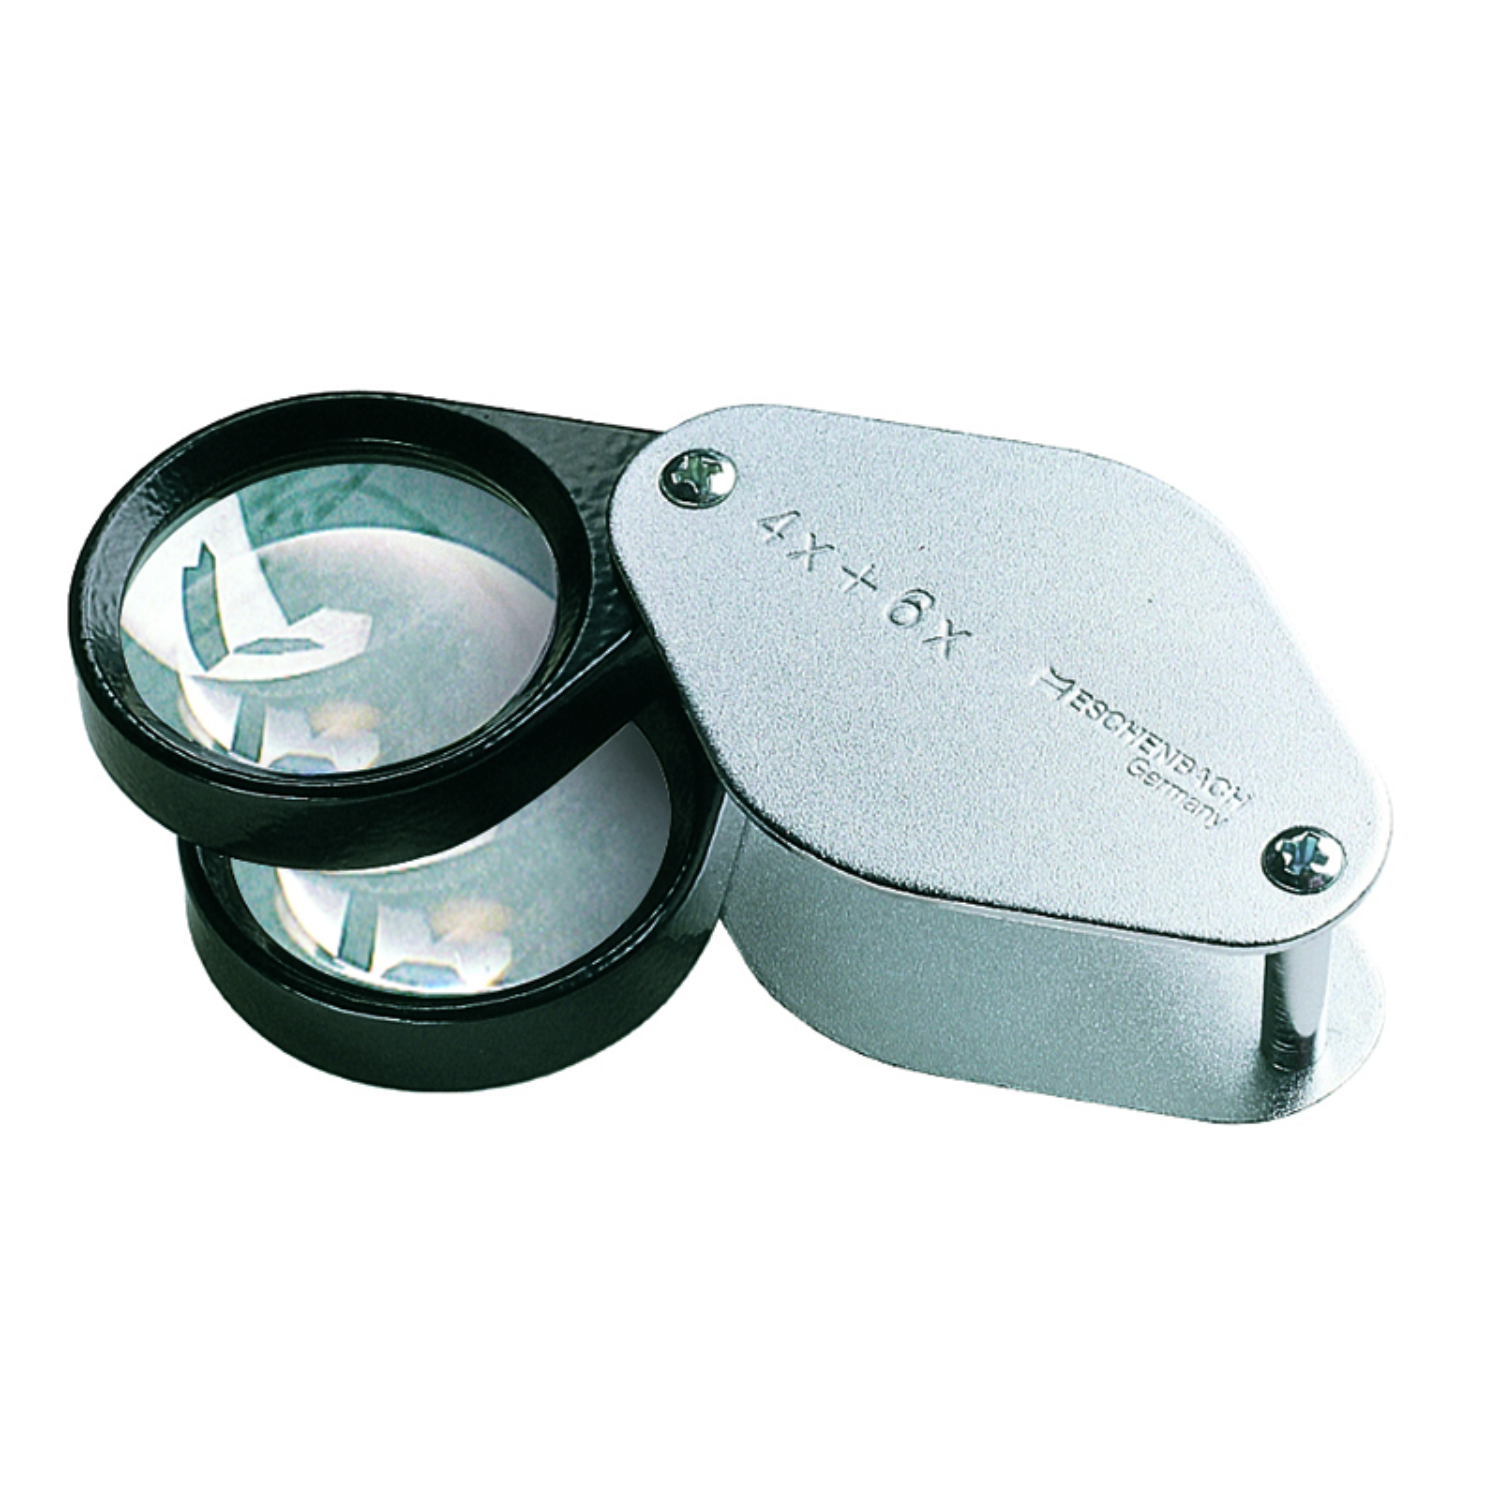 Image of the Eschenbach Folding Dual-Lens Pocket Magnifier - 4x + 6x.